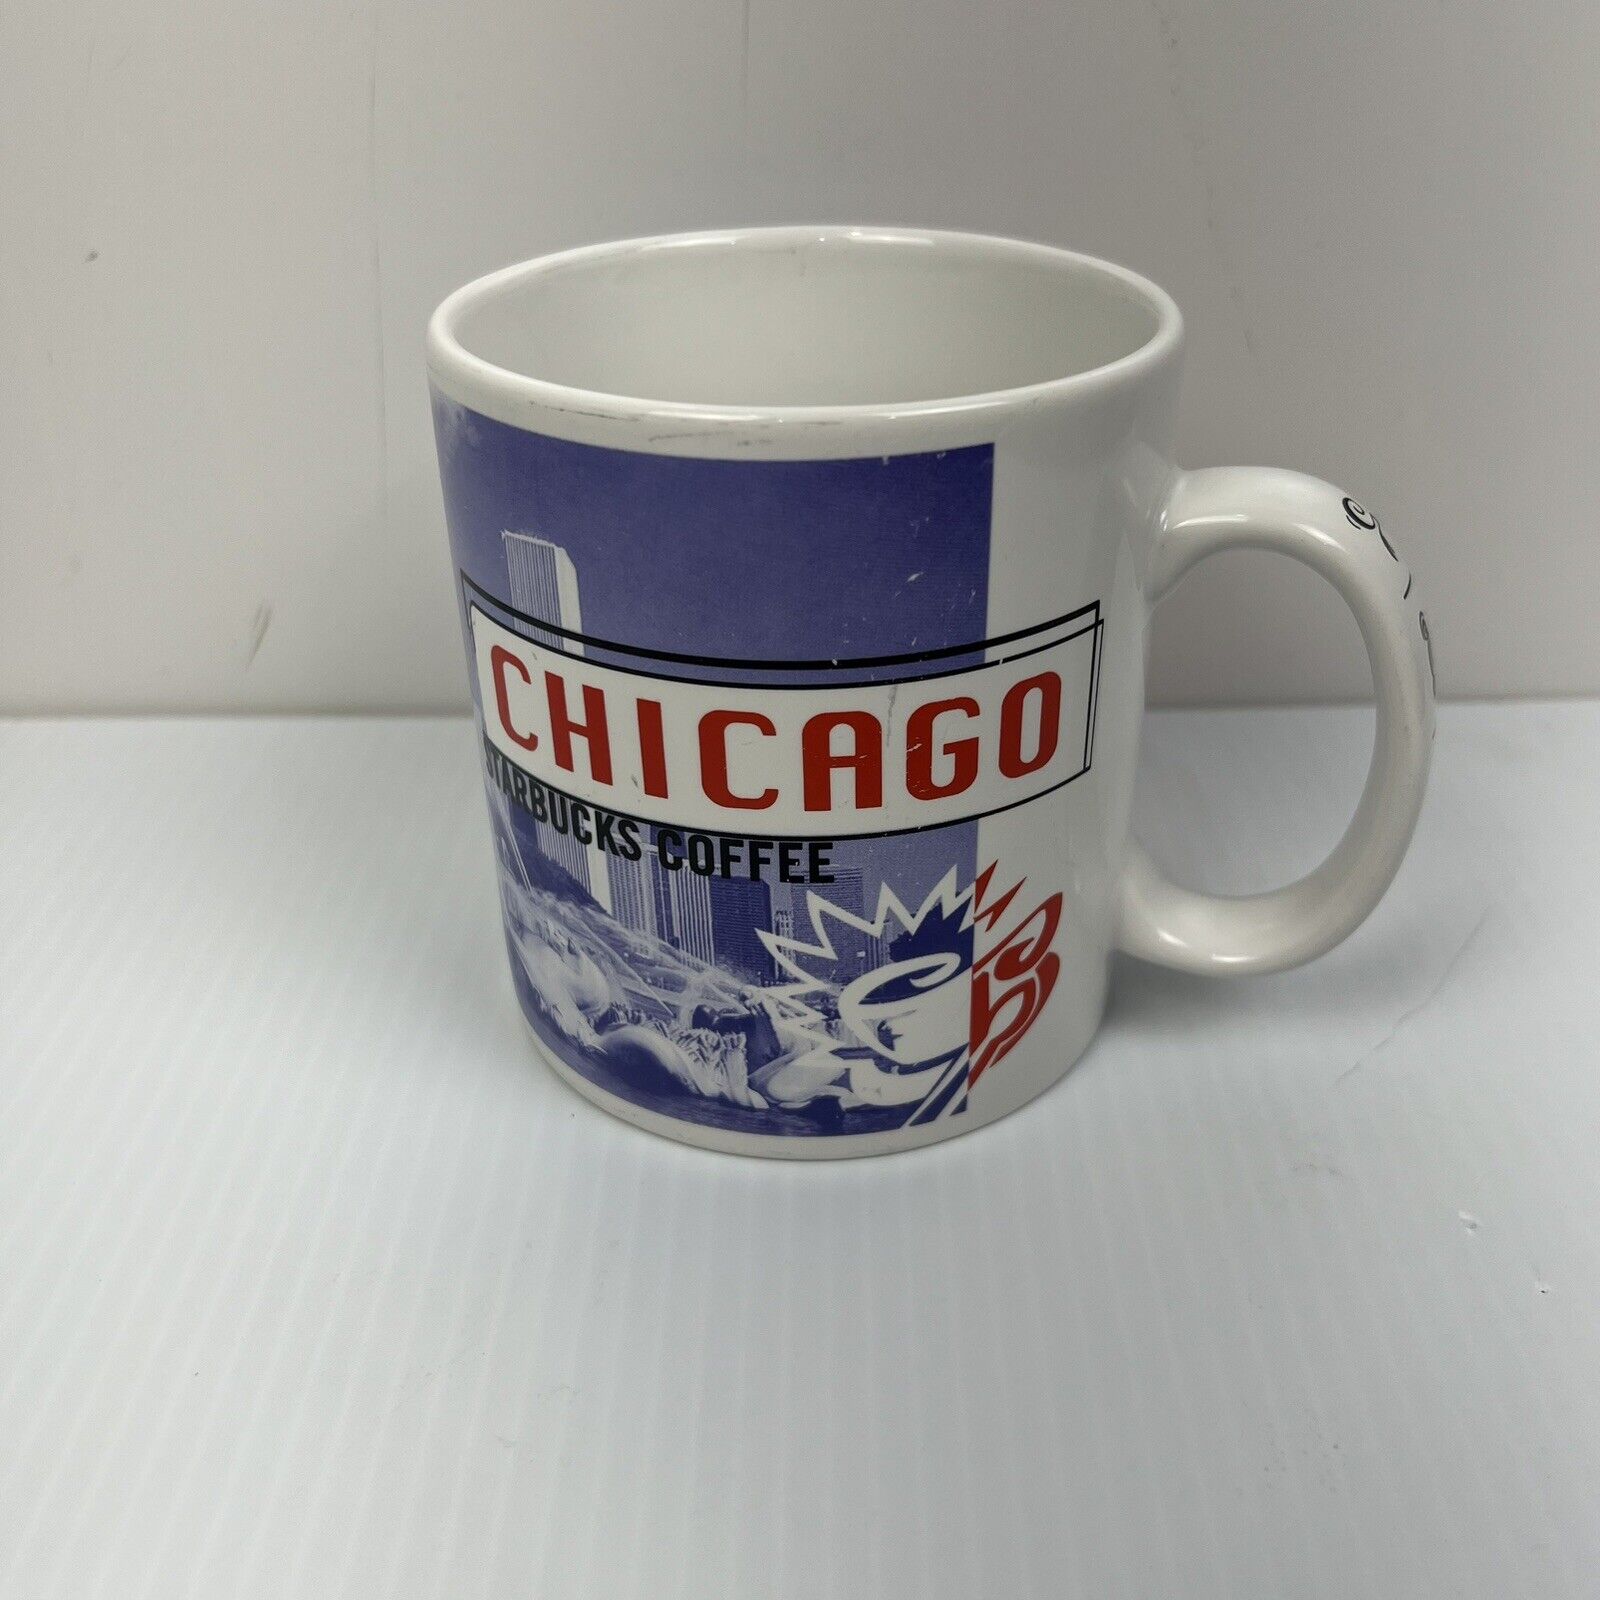 Vintage Starbucks Coffee Mug Chicago Cup 18 oz  1999